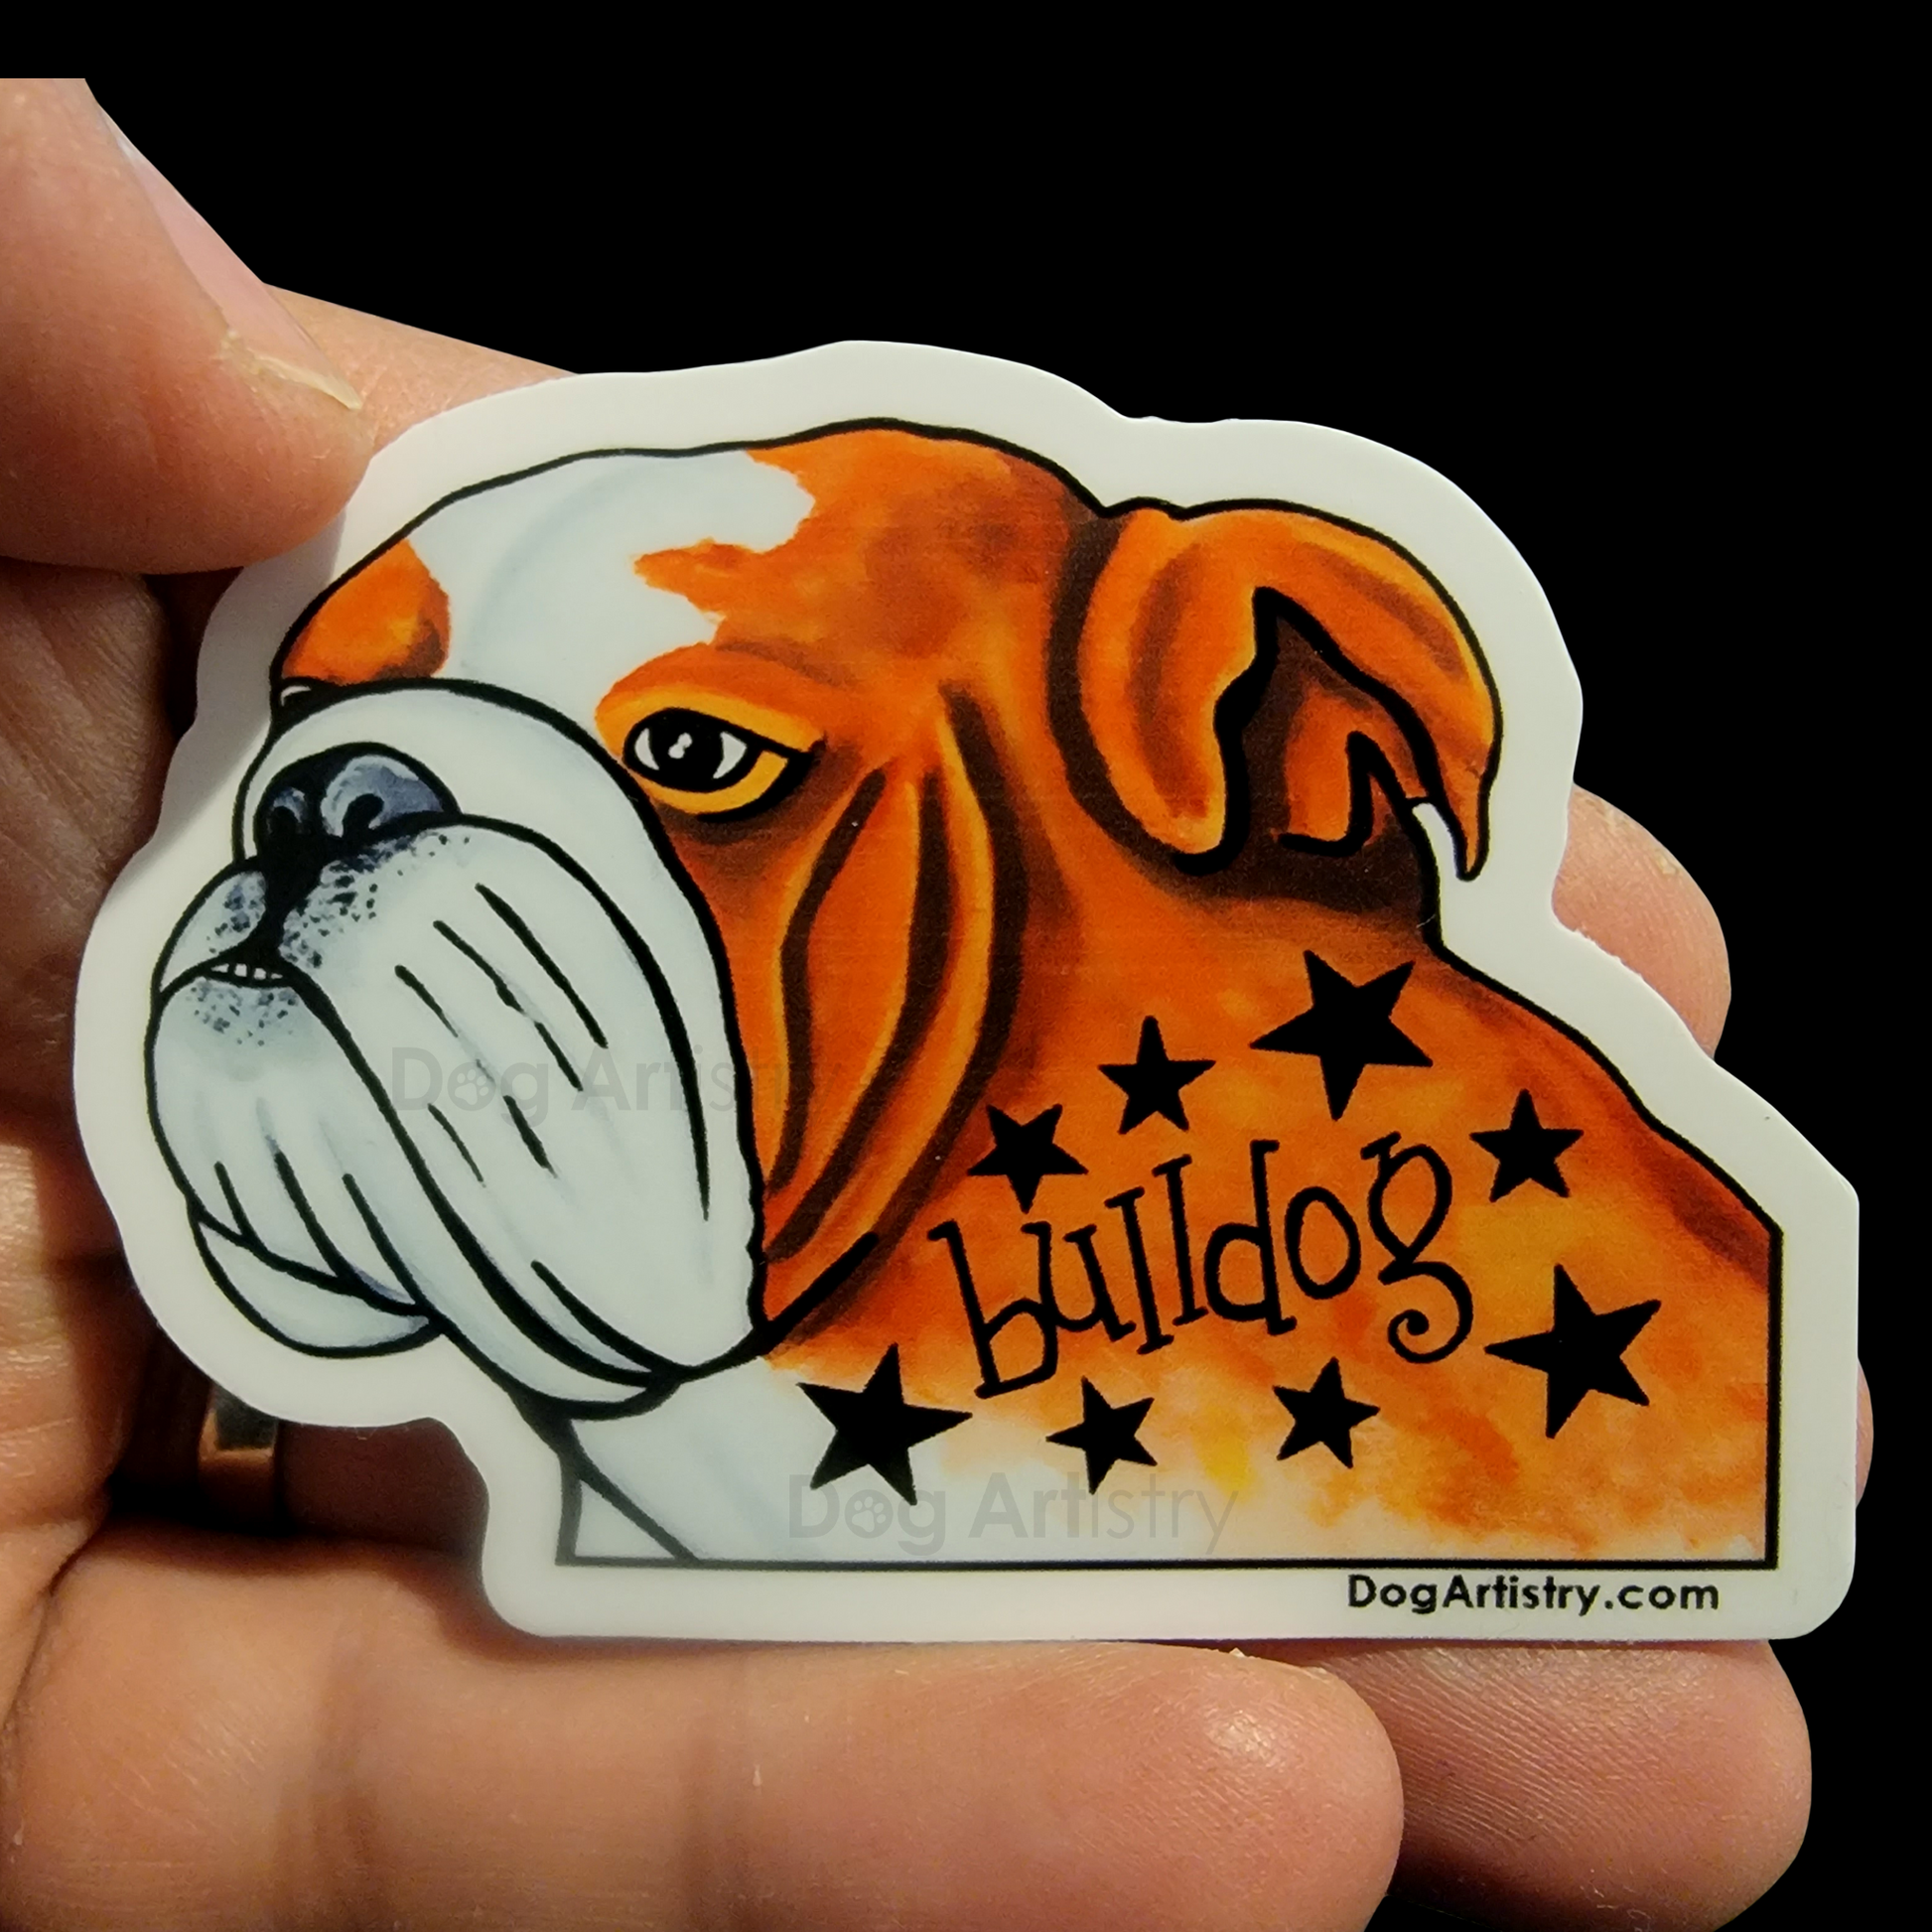 Dog Artistry English Bulldog Die-Cut Vinyl Sticker